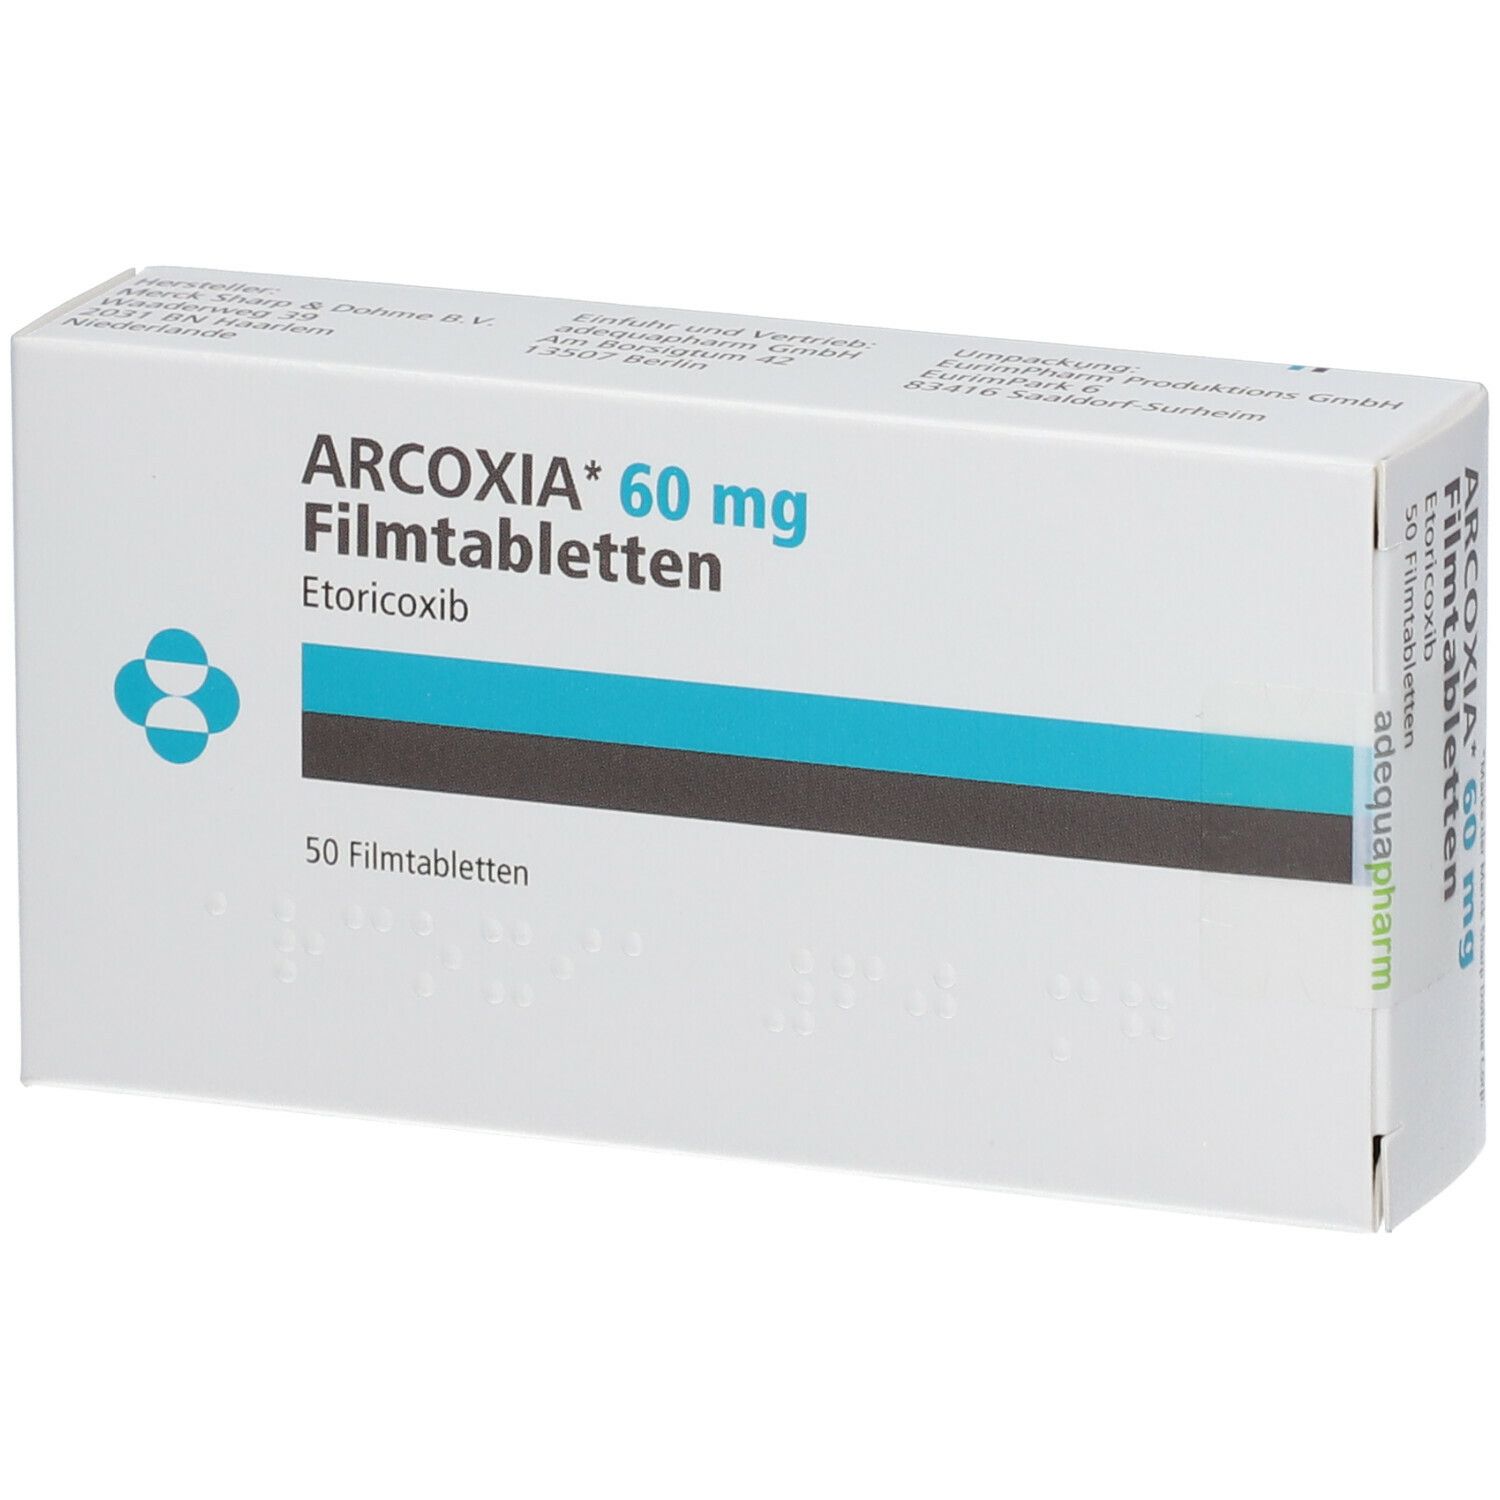 Arcoxia 60 mg